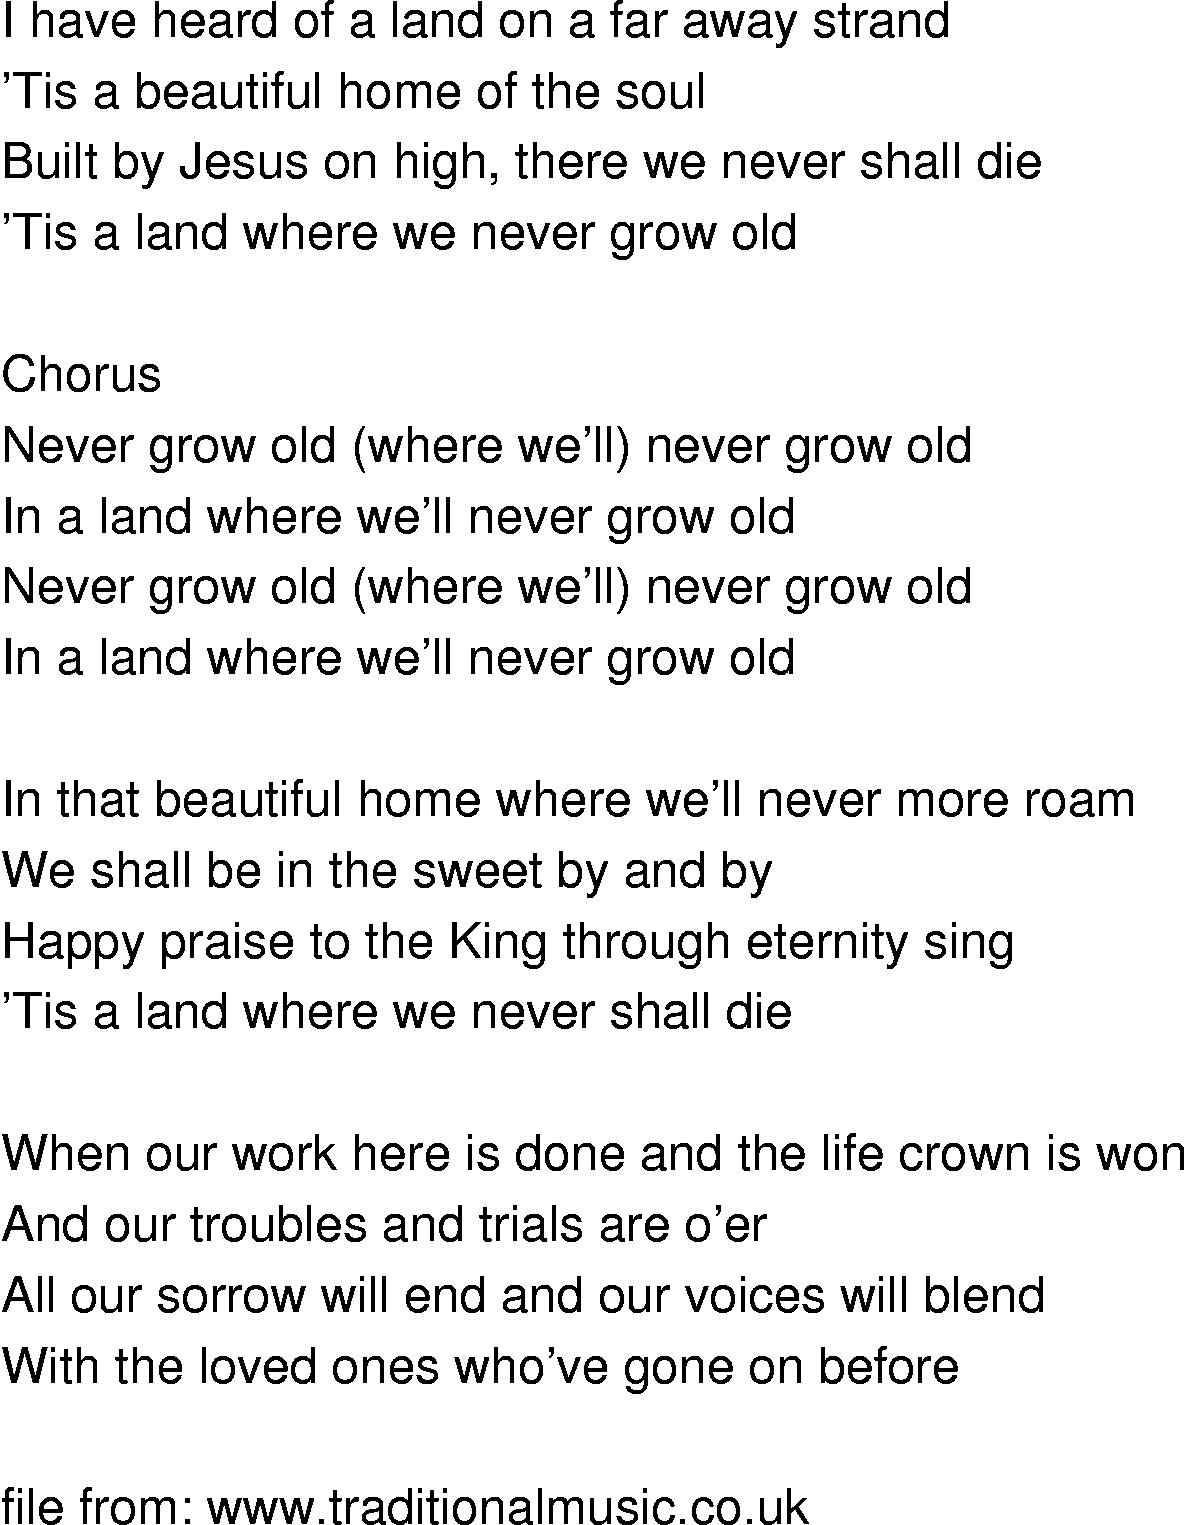 Old-Time (oldtimey) Song Lyrics - where well never grow old